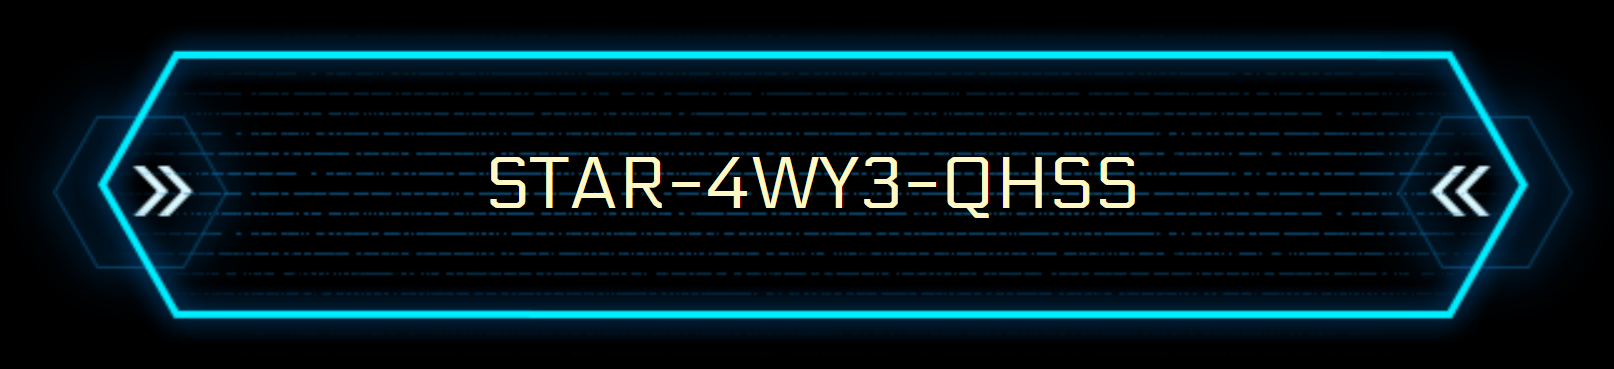 Star Citizen Referral Code: STAR-4WY3-QHSS